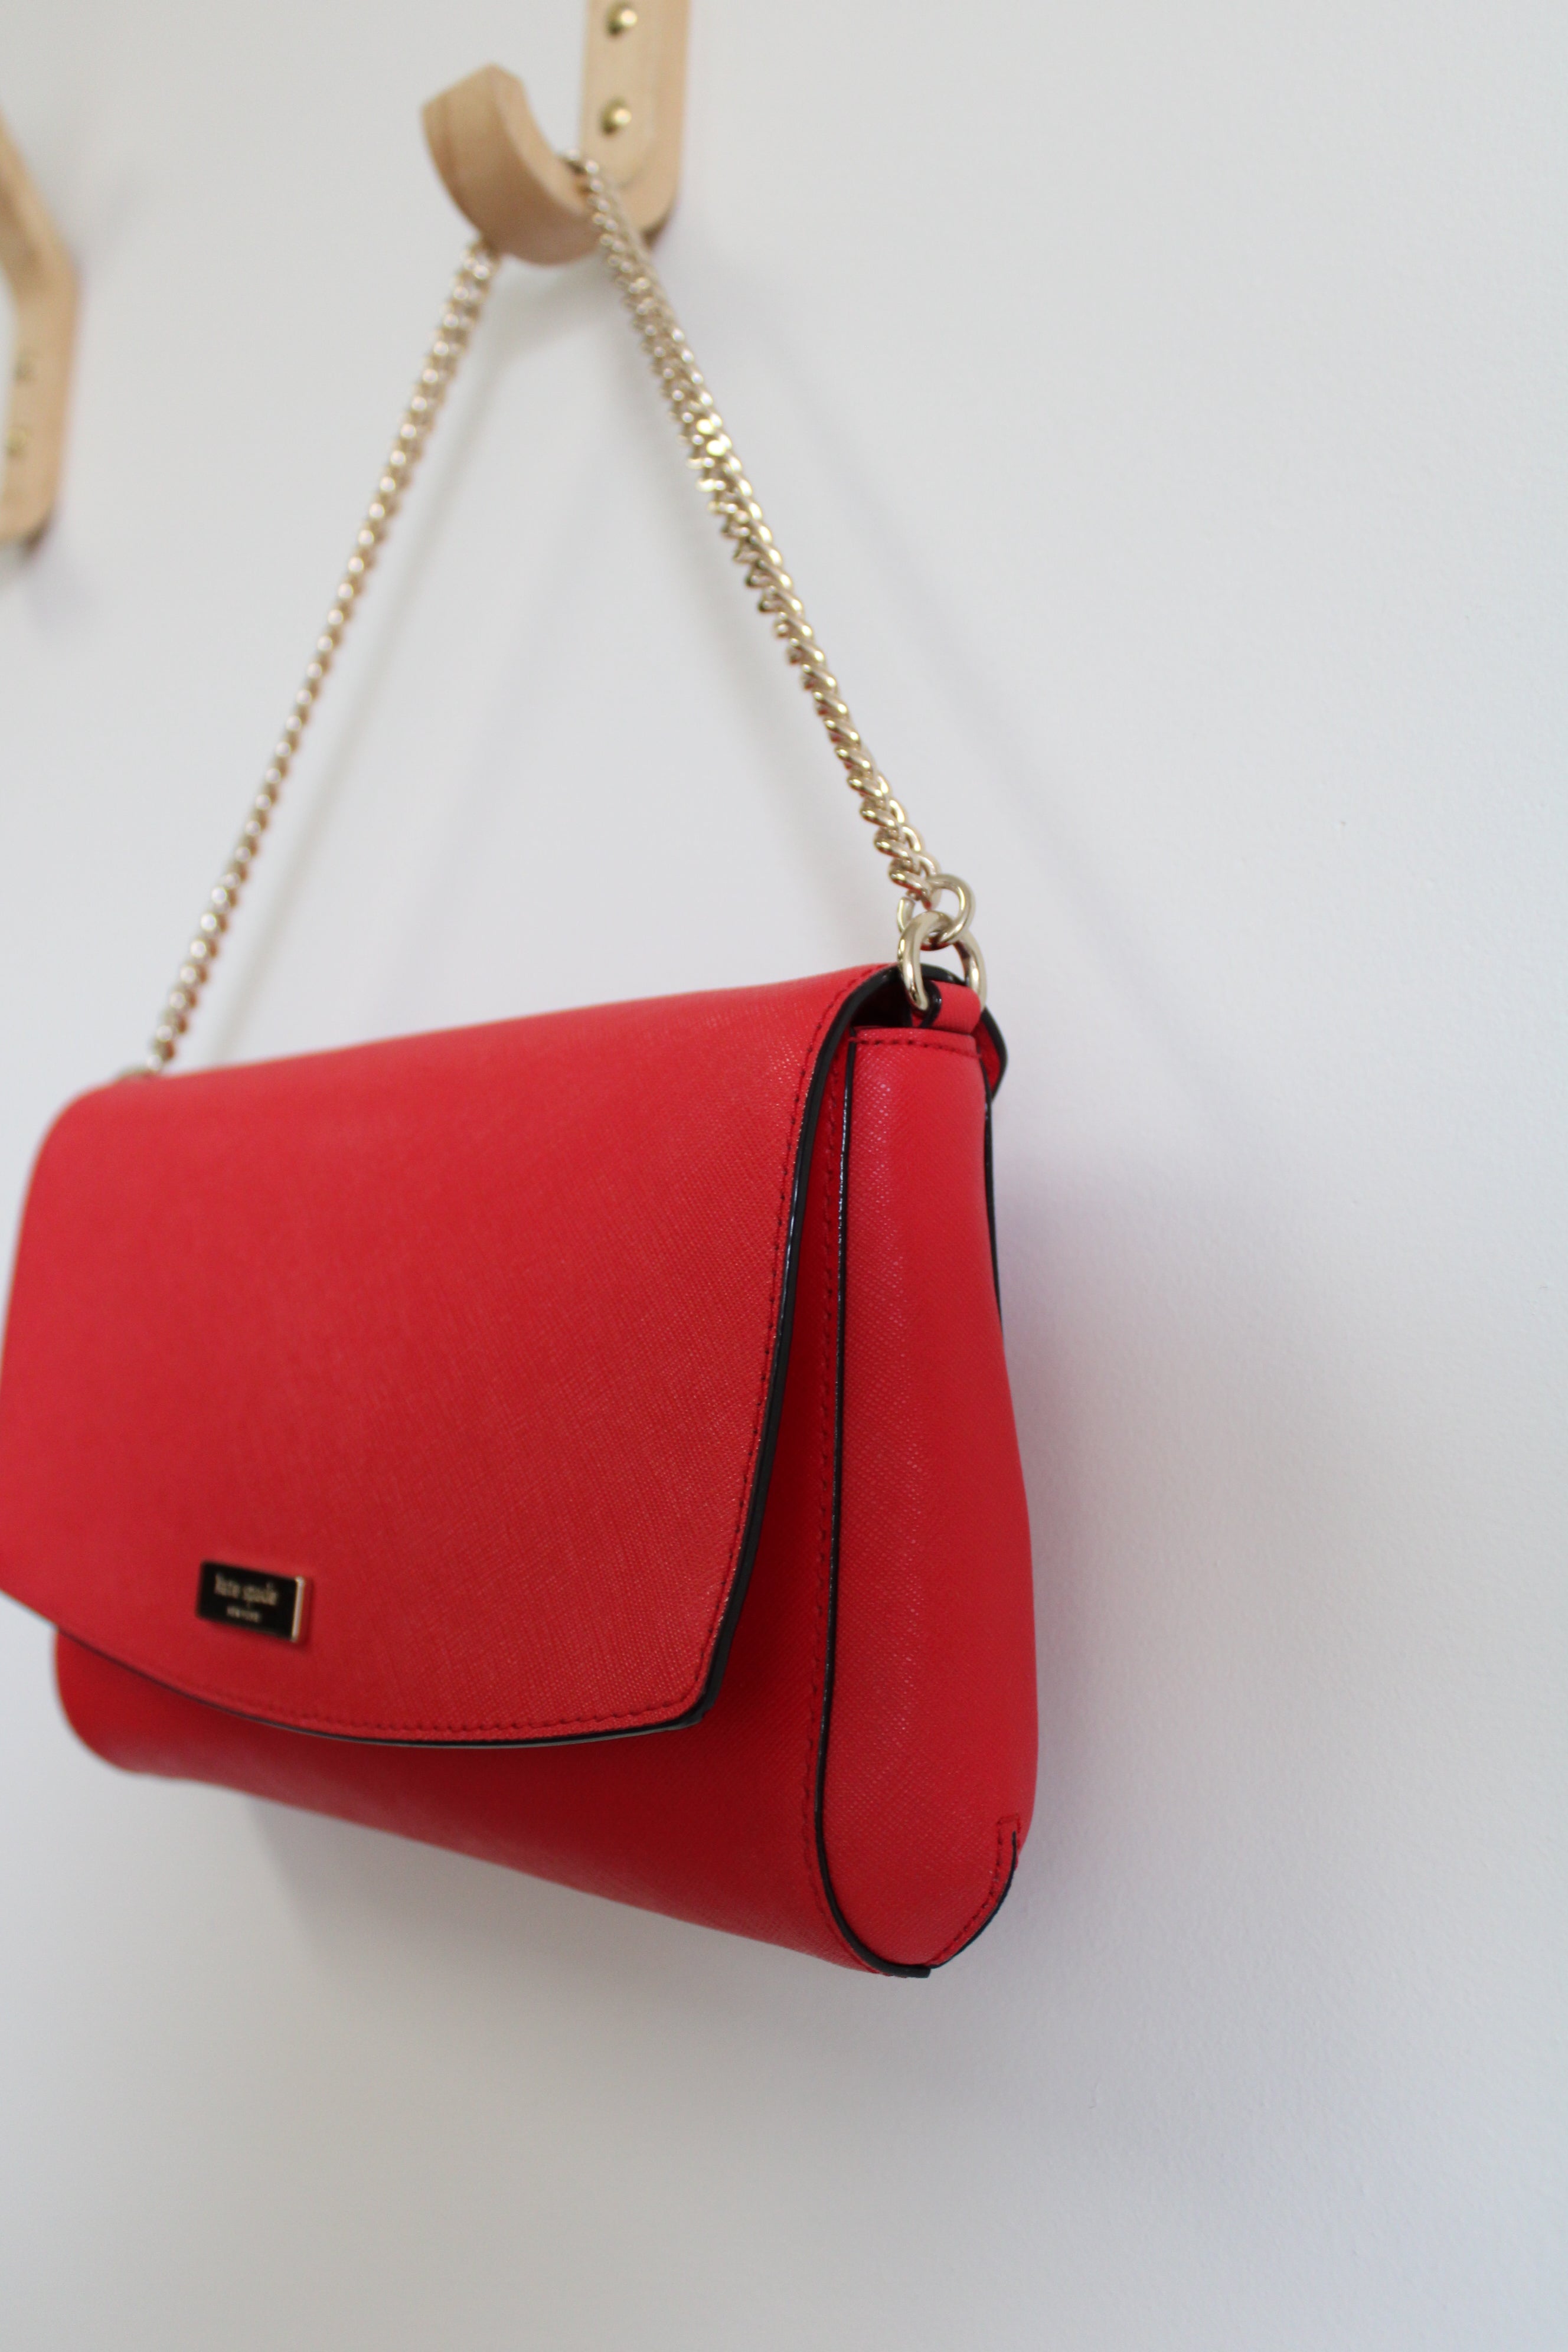 Kate Spade Madison Large Rose Satchel Black red handbag/wallet Option NWT  2023 | eBay